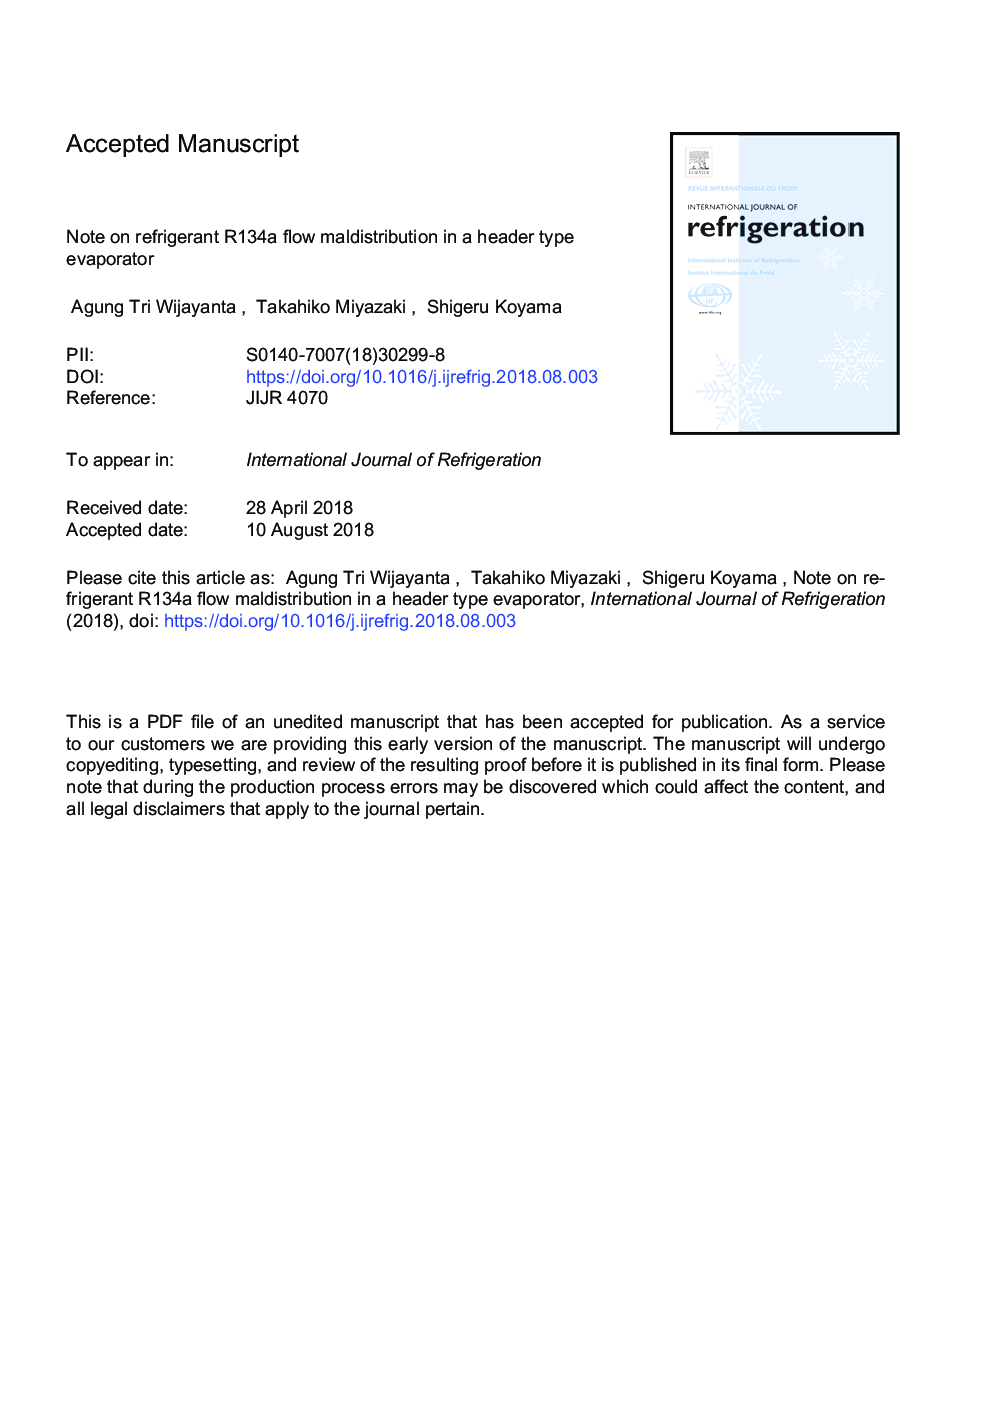 Note on refrigerant R134a flow maldistribution in a header type evaporator